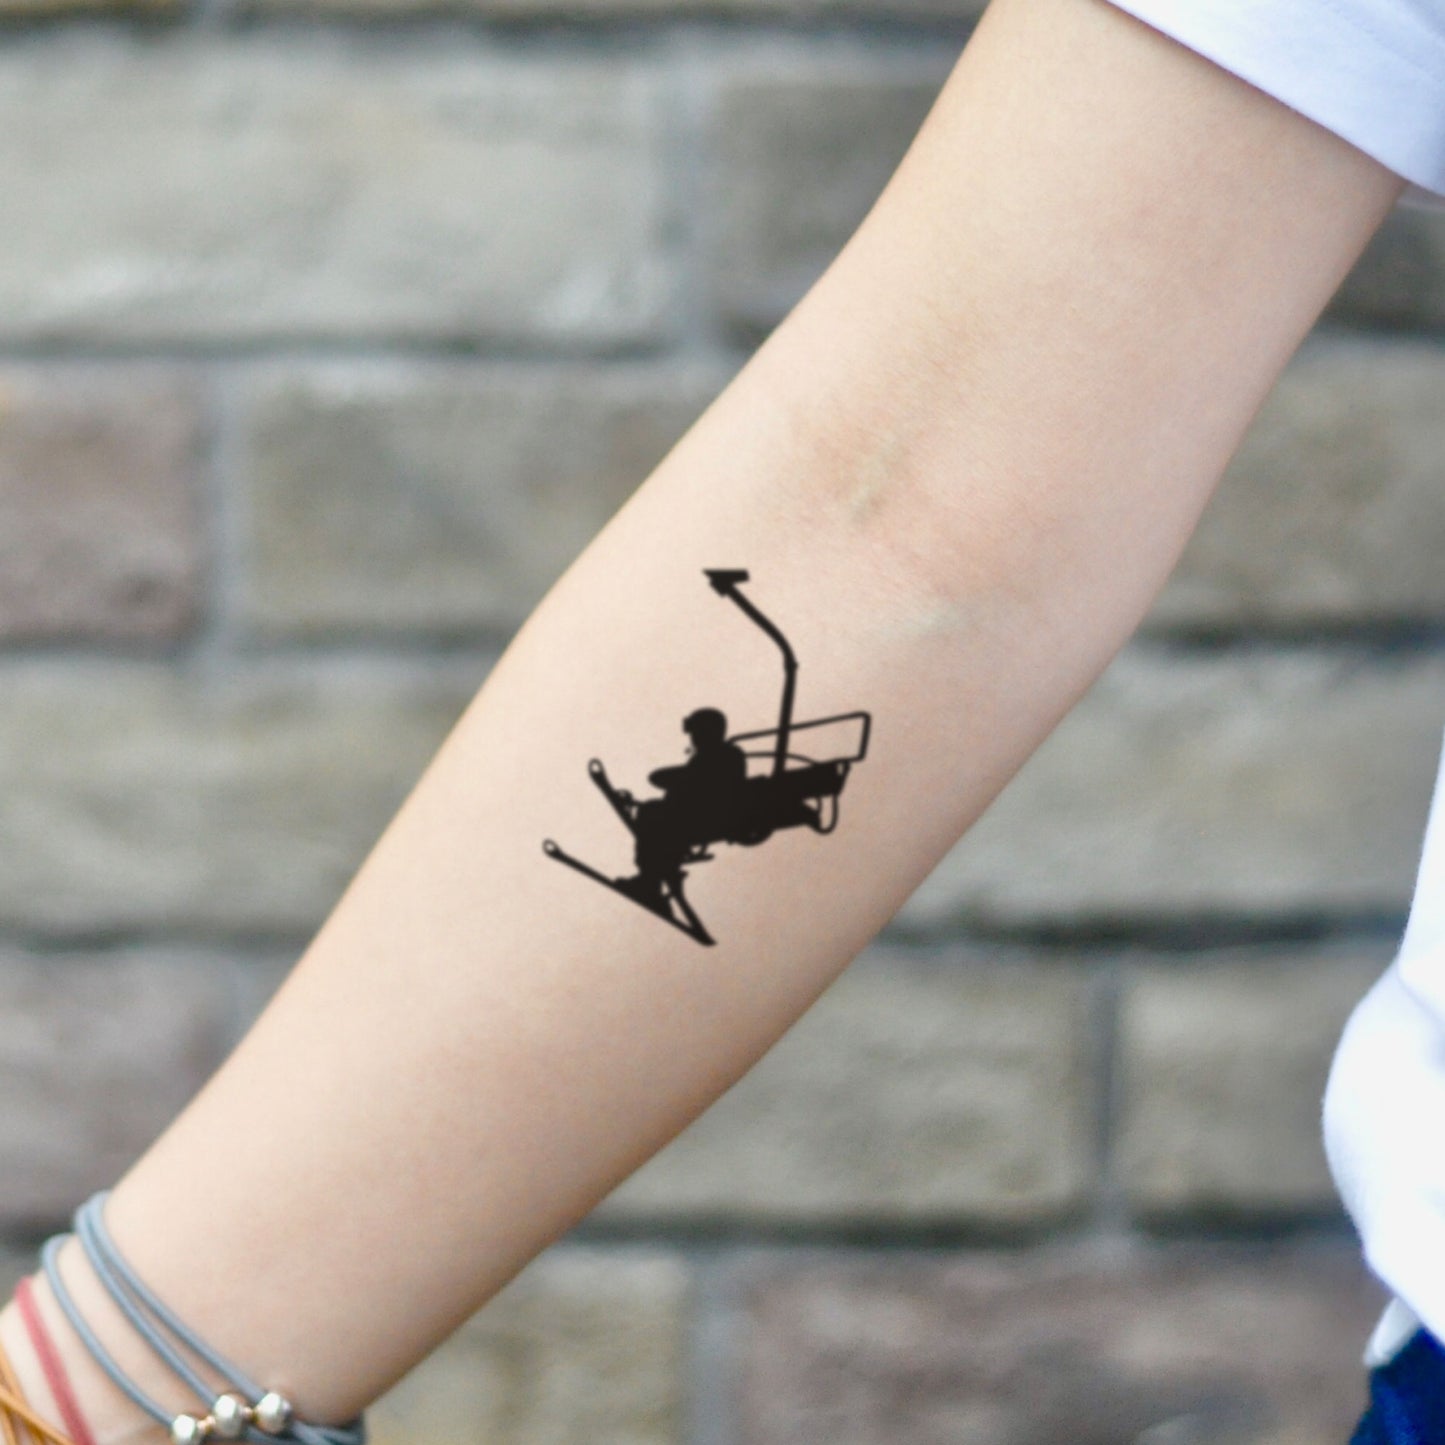 fake small snowboard ski illustrative temporary tattoo sticker design idea on inner arm